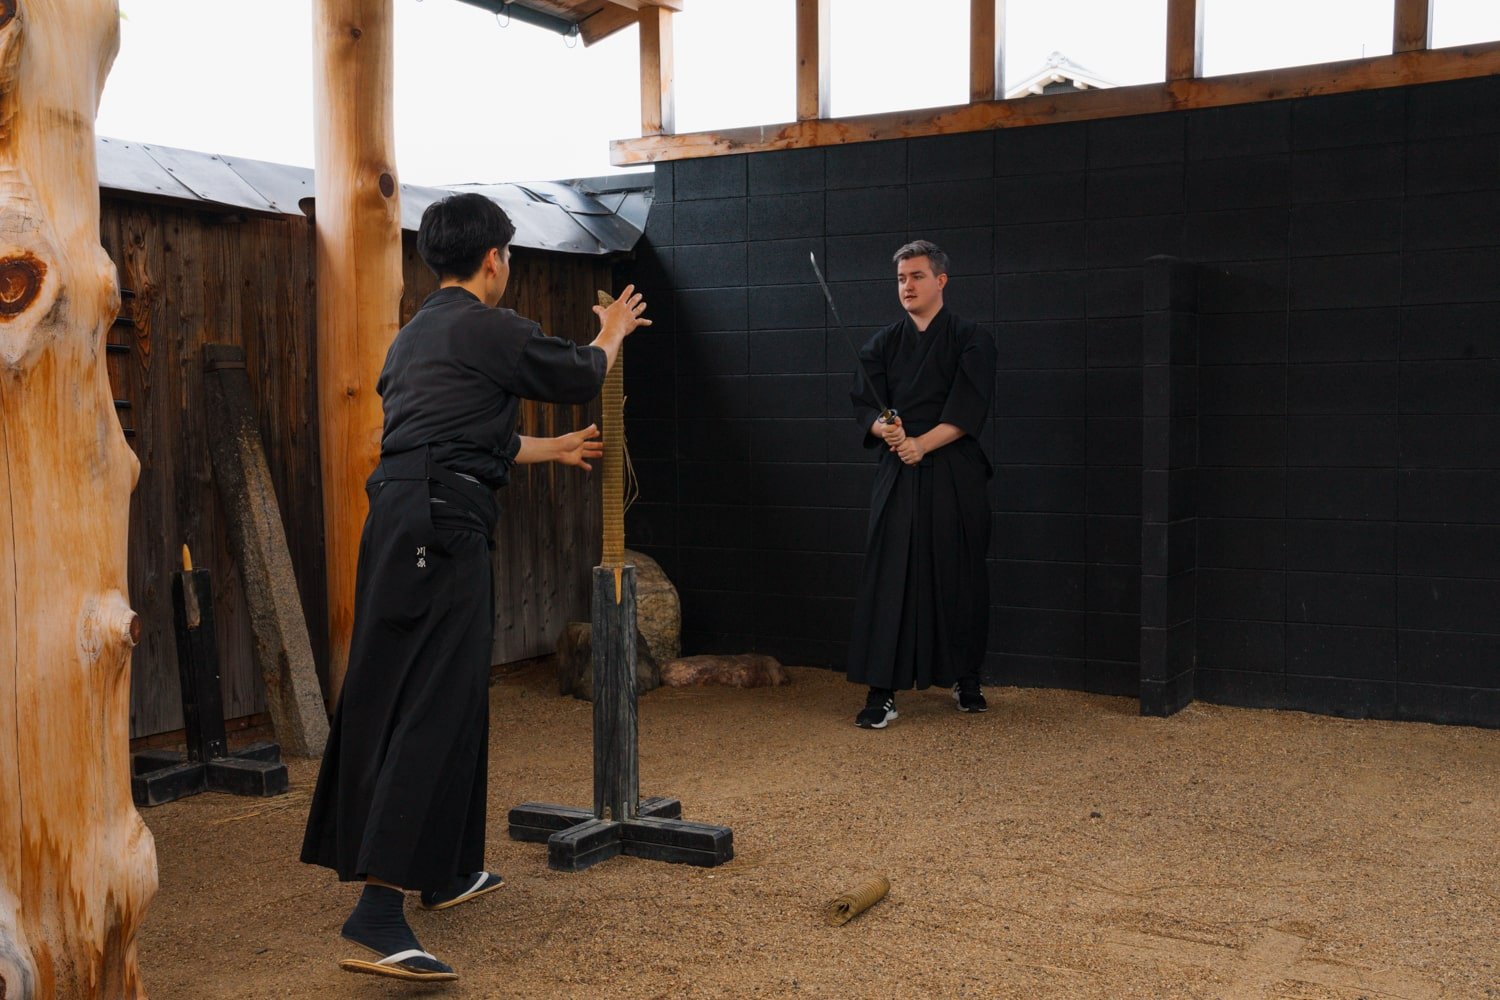 A katana sword expert places tatami roll for tourist to slice through using katana sword during Kyoto Samurai Experience.